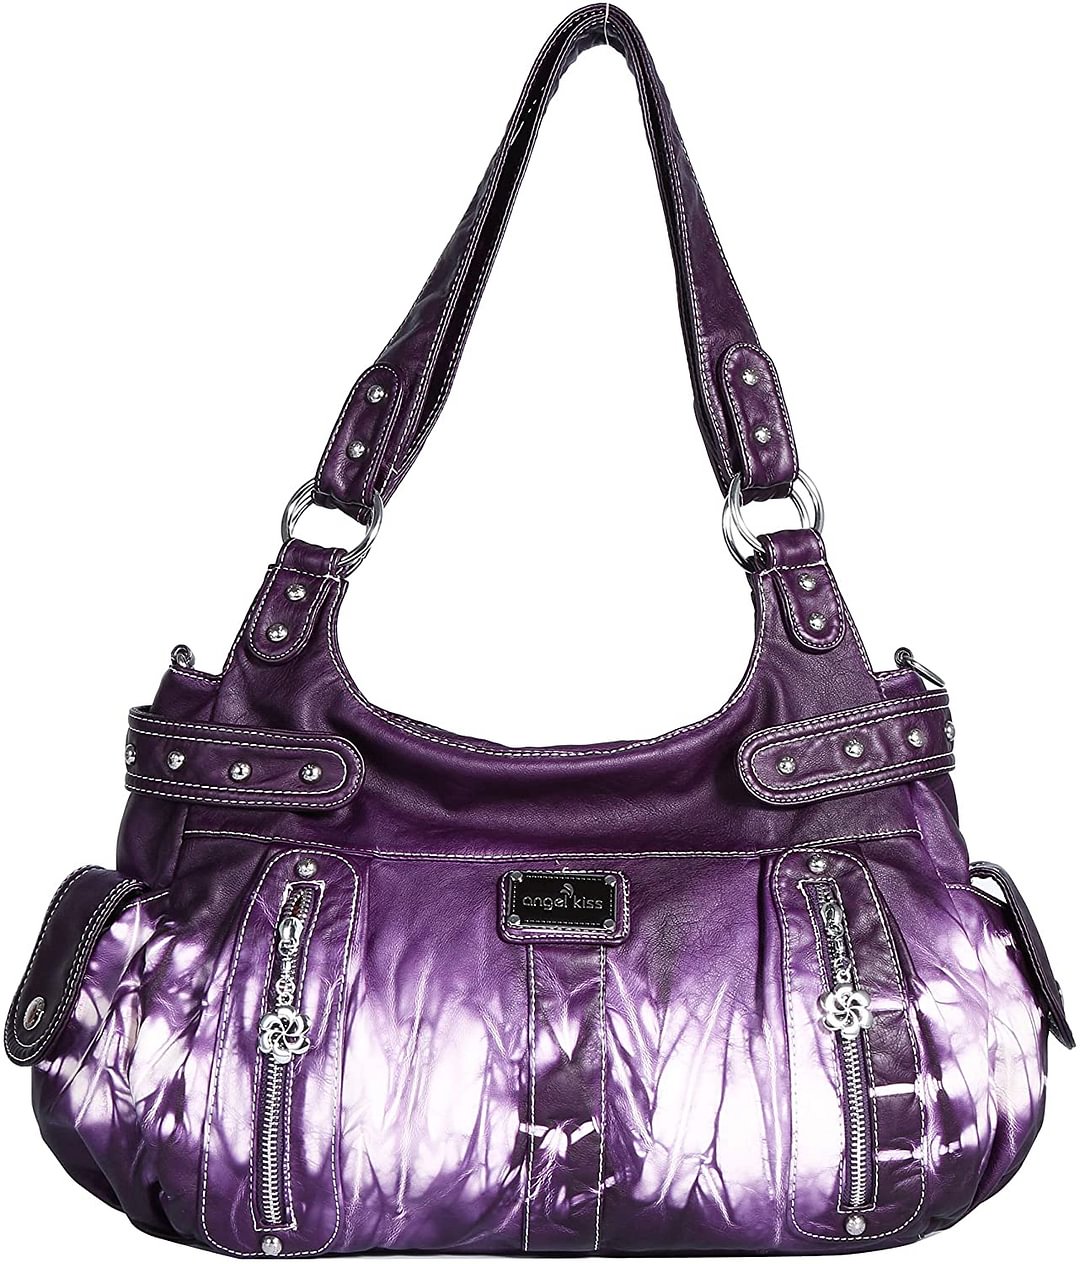 Design Handbags Womens Purse Feel Soft Lether Multiple Top Zipper Pockets Shoulder Bags Large